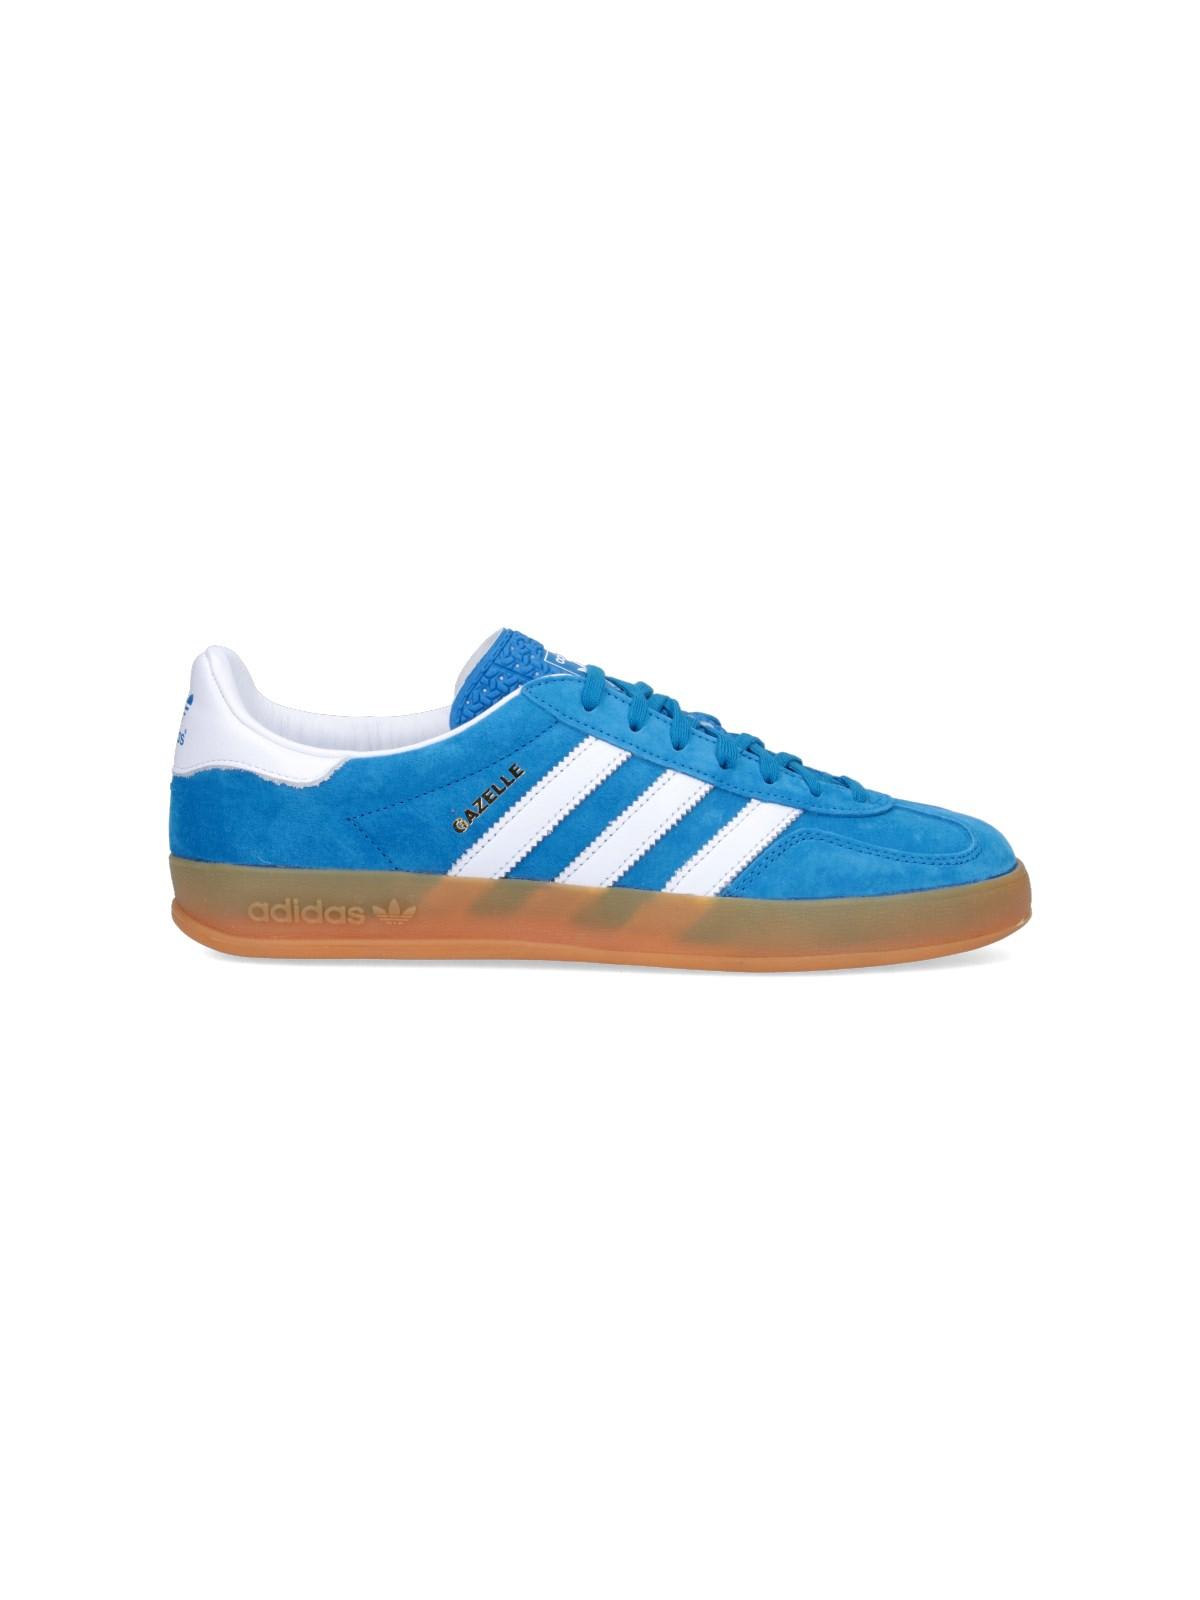 Shop Adidas Originals Gazelle Indoor Sneakers In Blubir/ftwwht/blubir